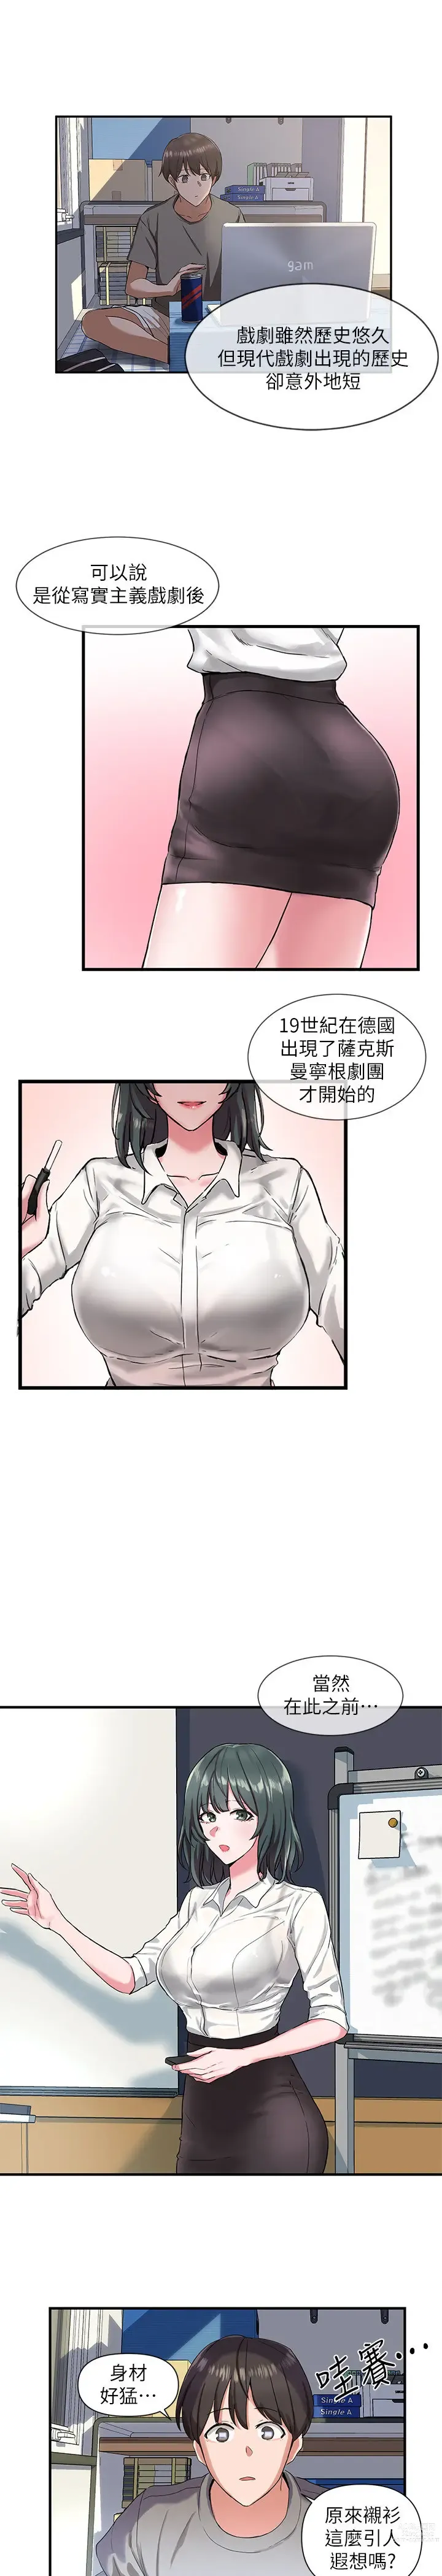 Page 9 of manga 社团学姐/Circles 1-50